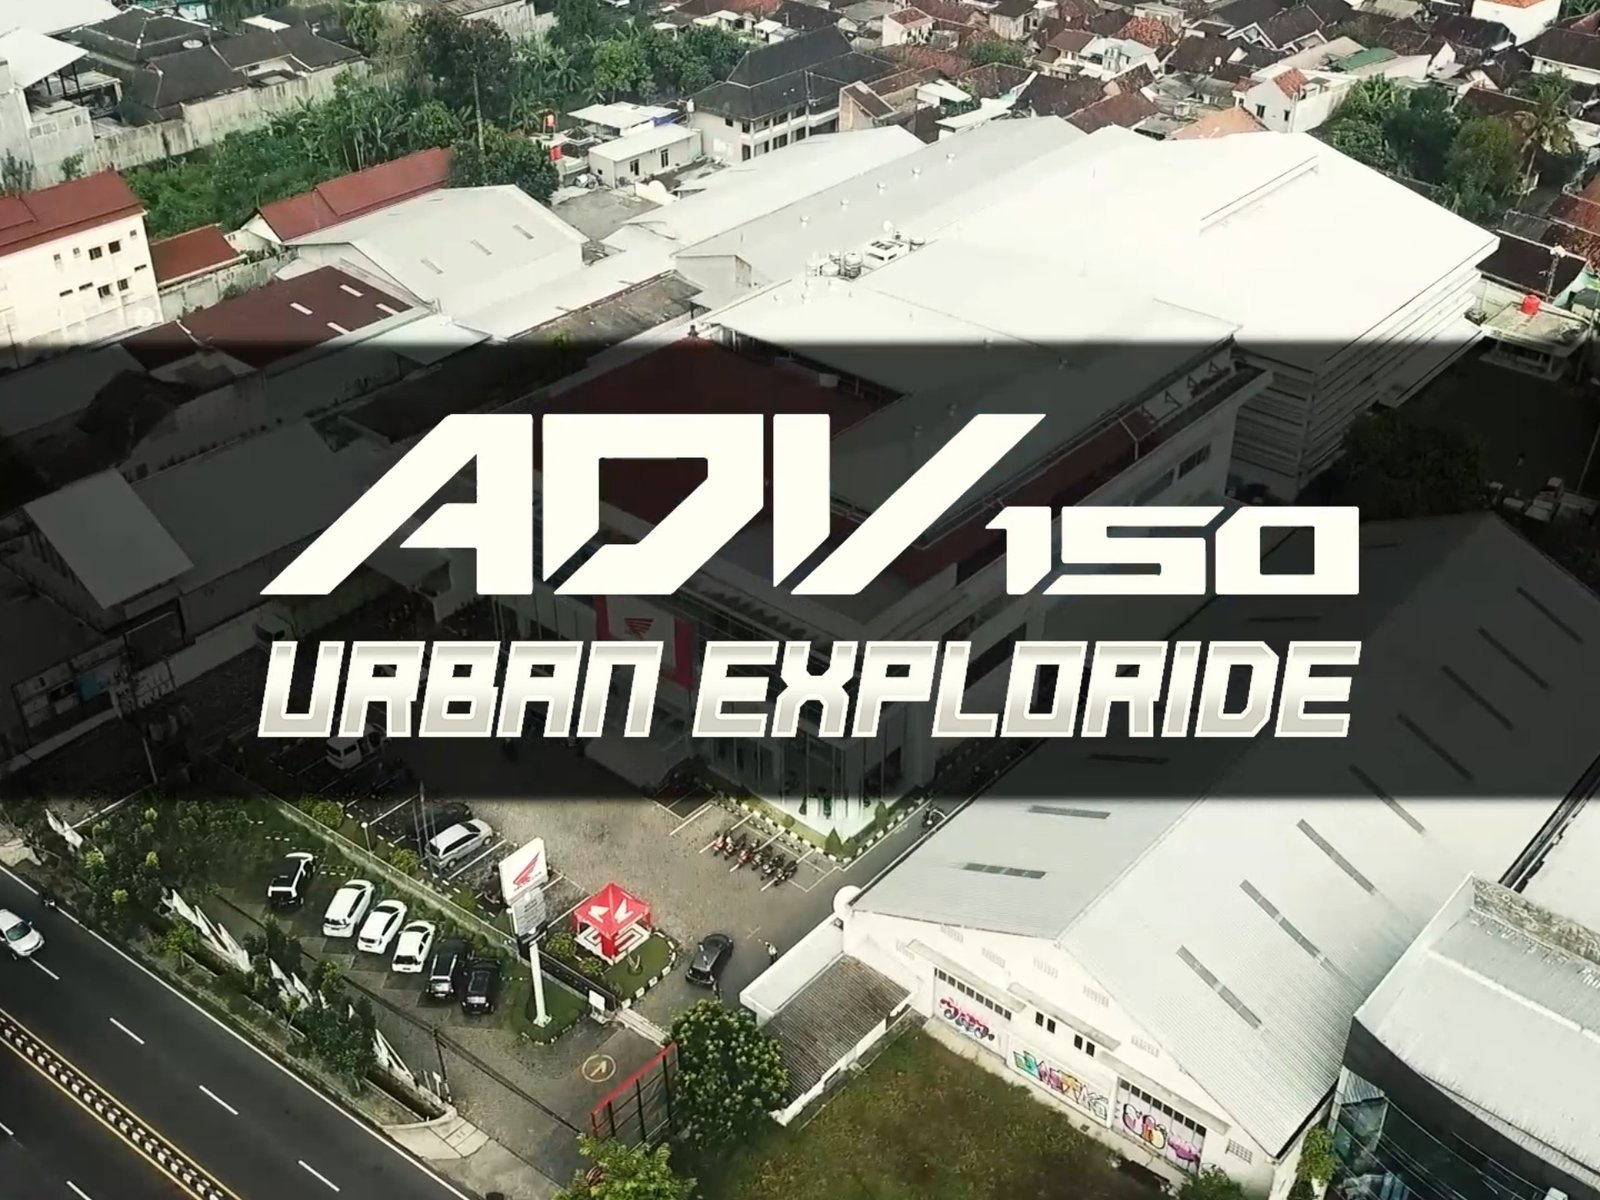 ADV150 Urban Exploride 2021